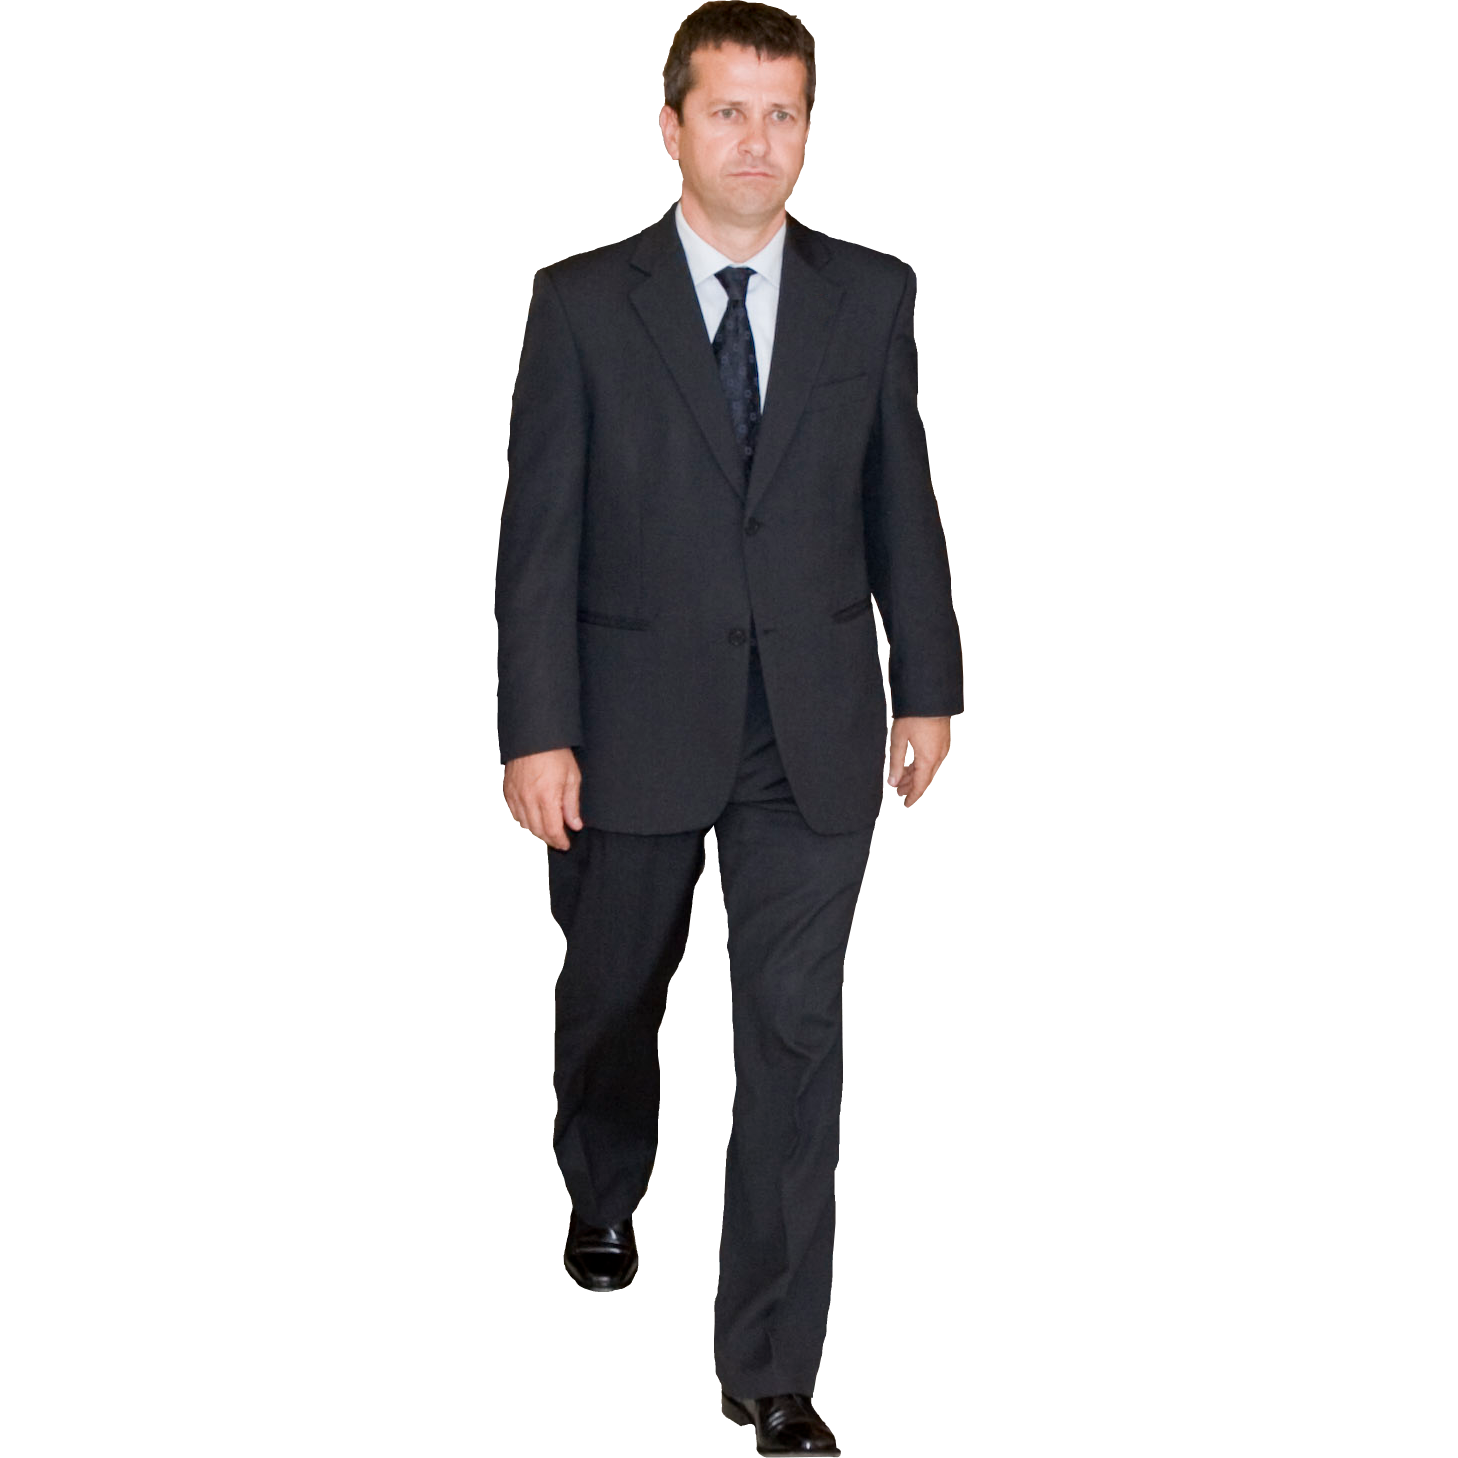 Guy In A Suit Png - Suit Png Transparent Image, Transparent background PNG HD thumbnail